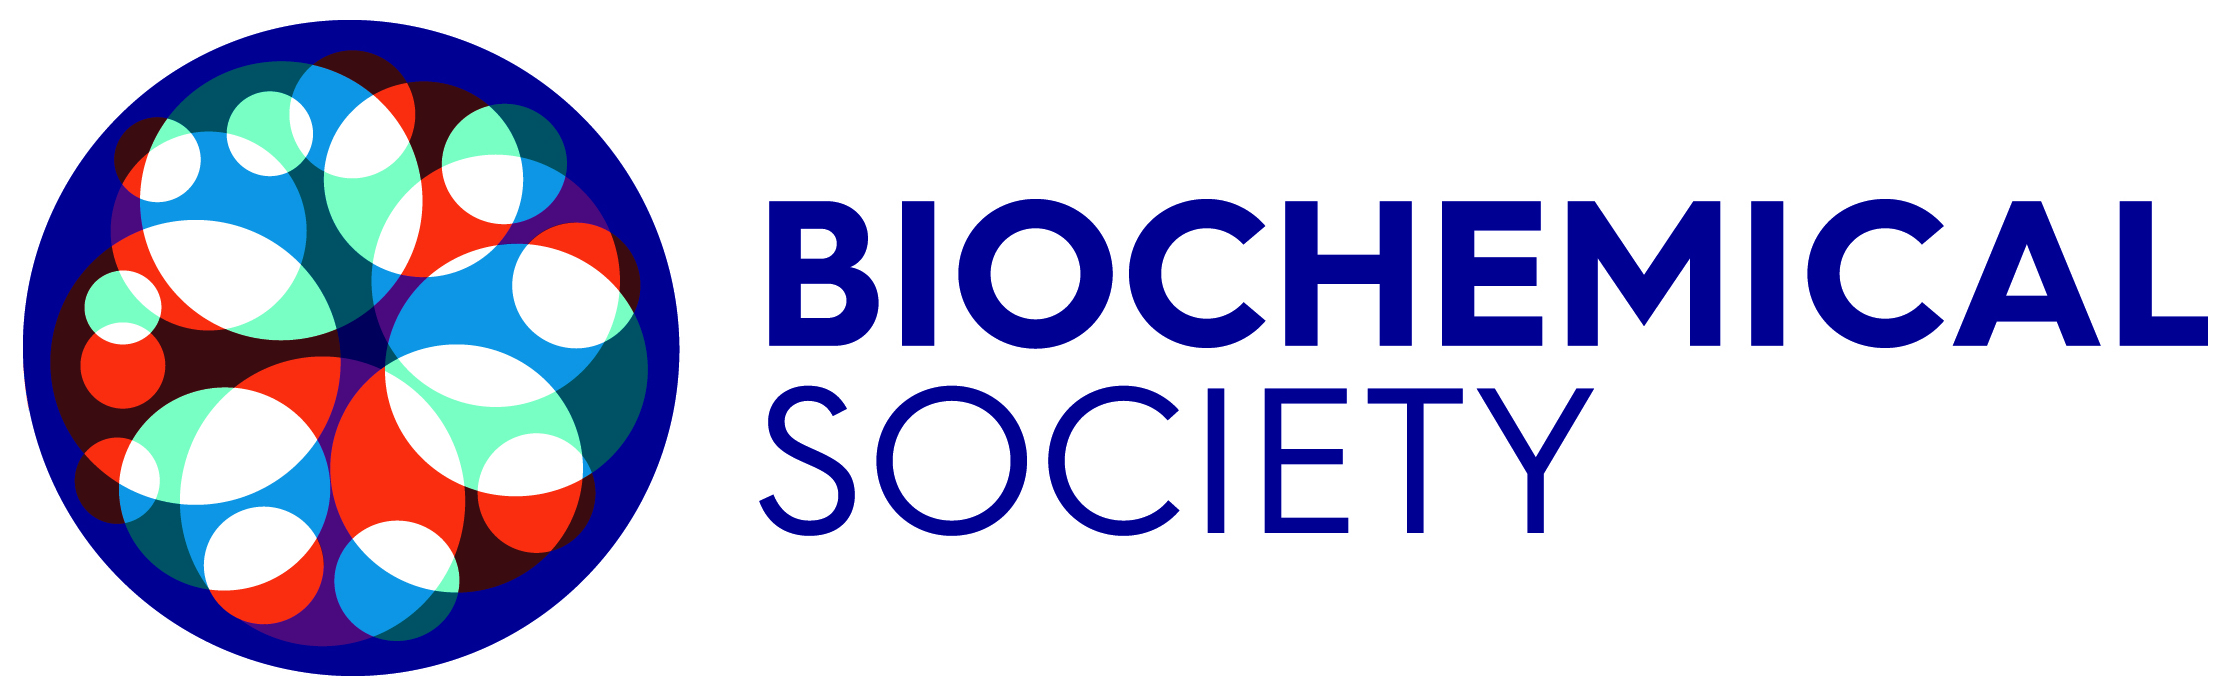 2018-04/1523524848_biochemicalsoc_logo_cmyk_aw.jpg